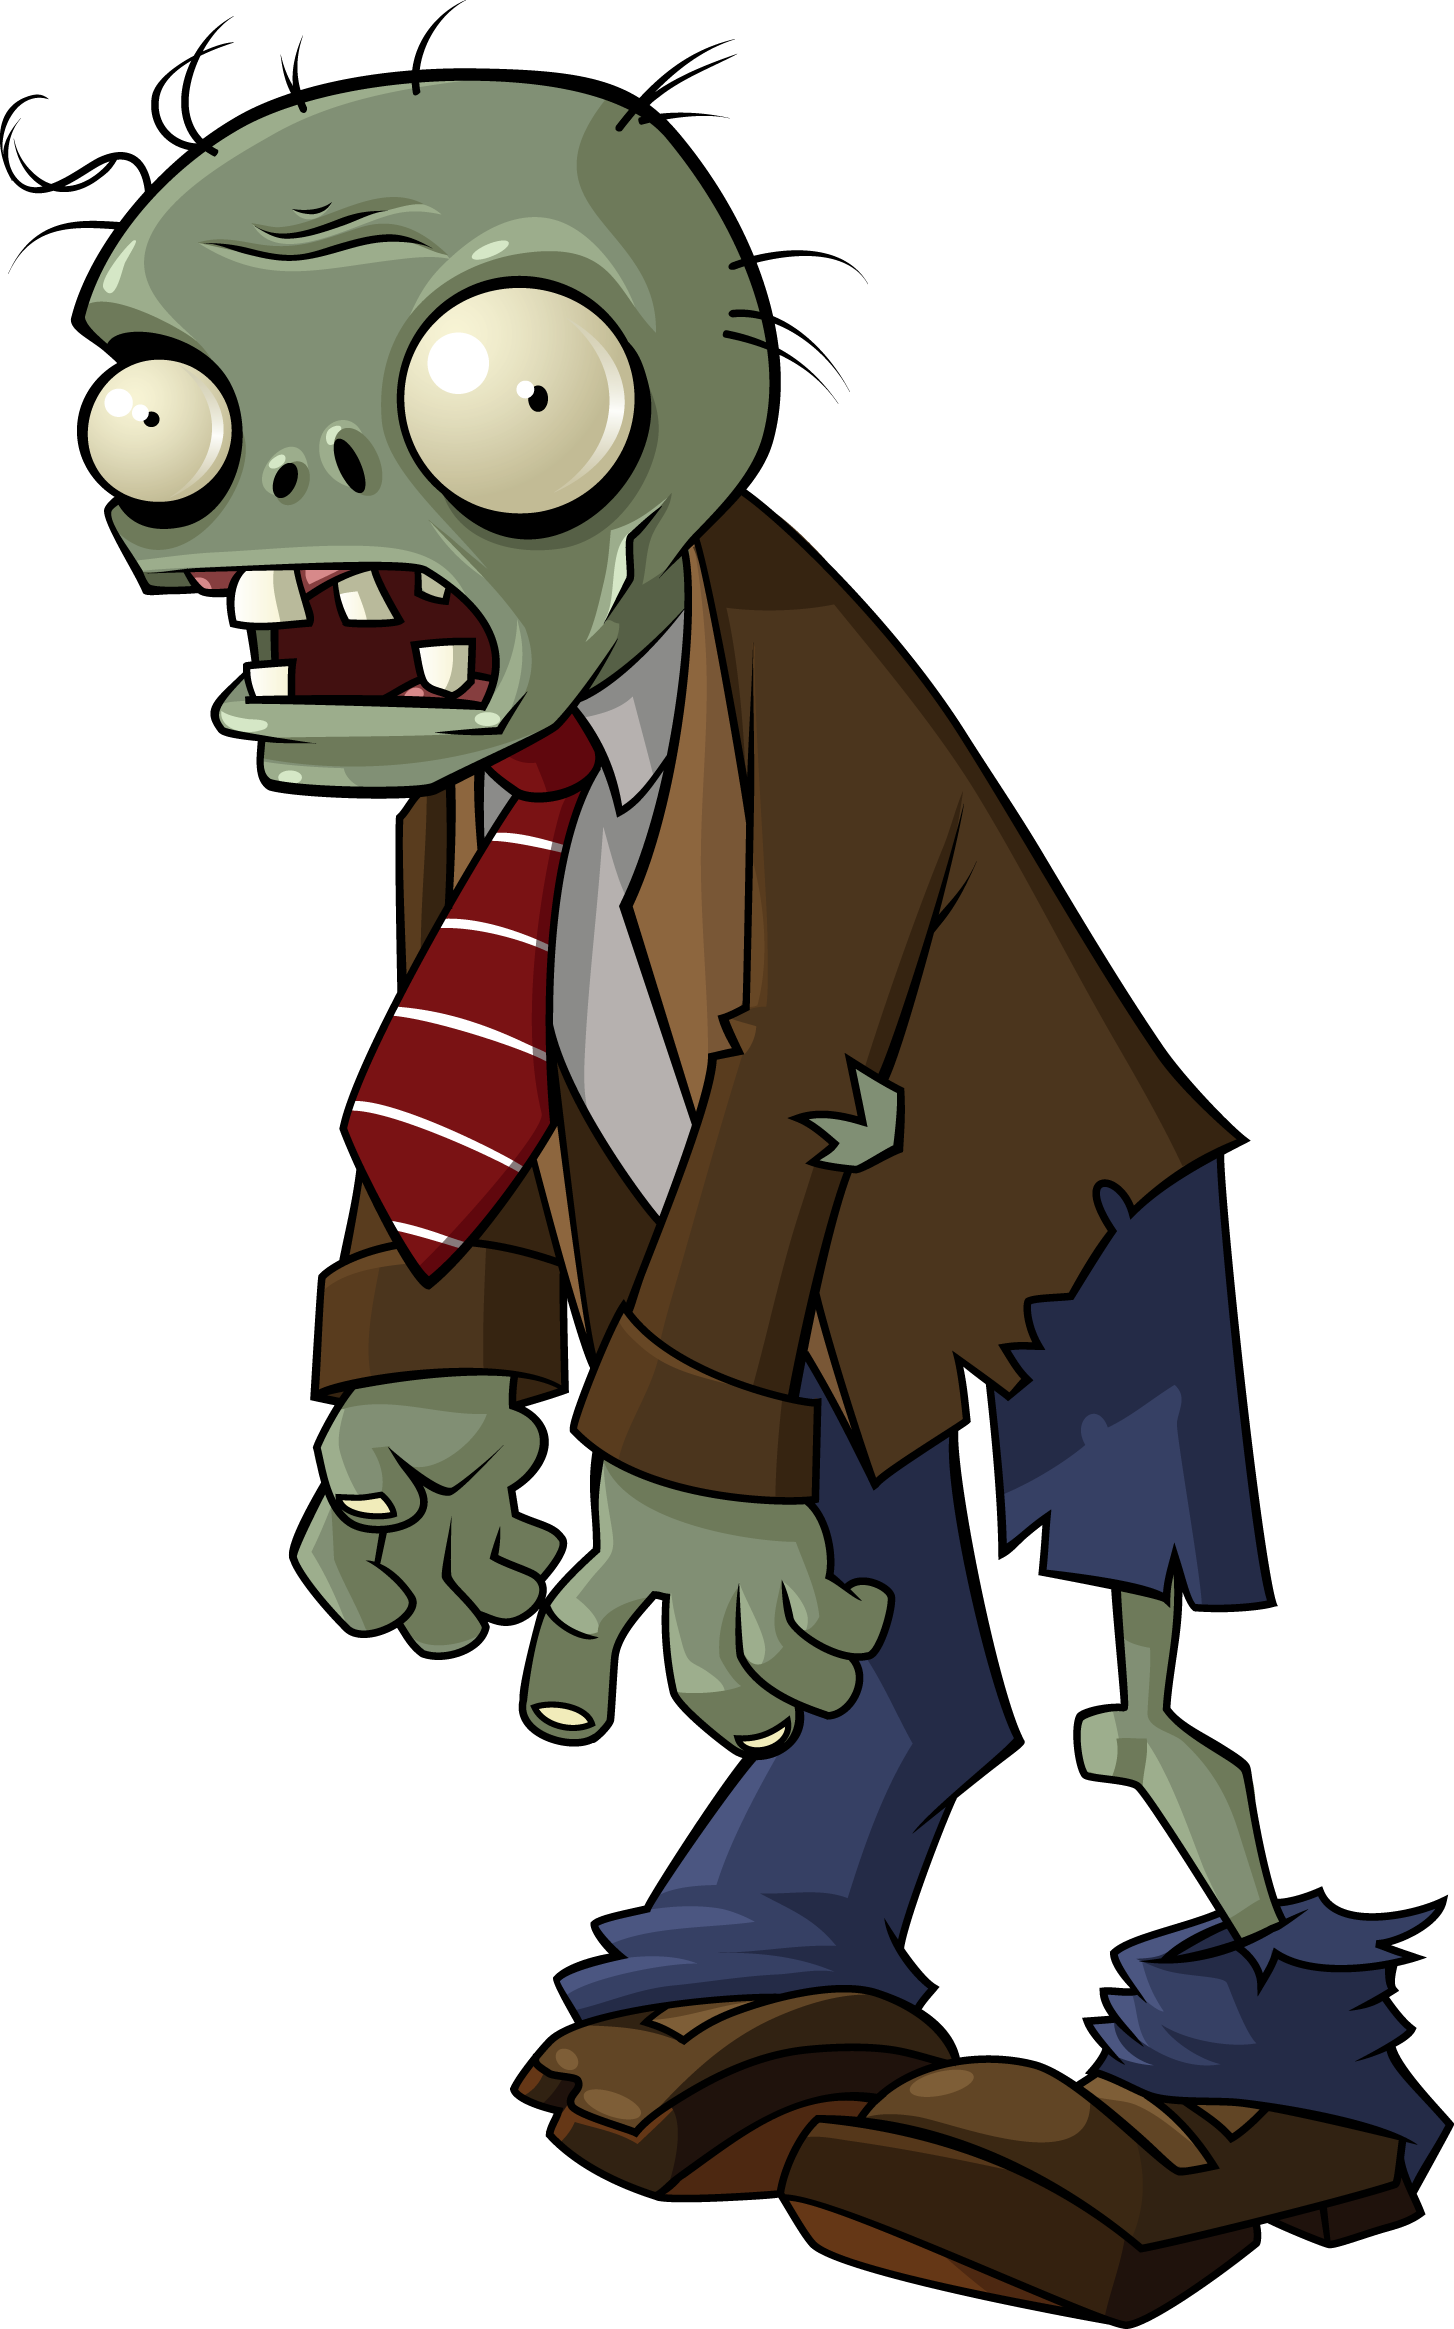 zombies-plants-vs-zombies-deadliest-fiction-wiki-write-your-own-fictional-battles-you